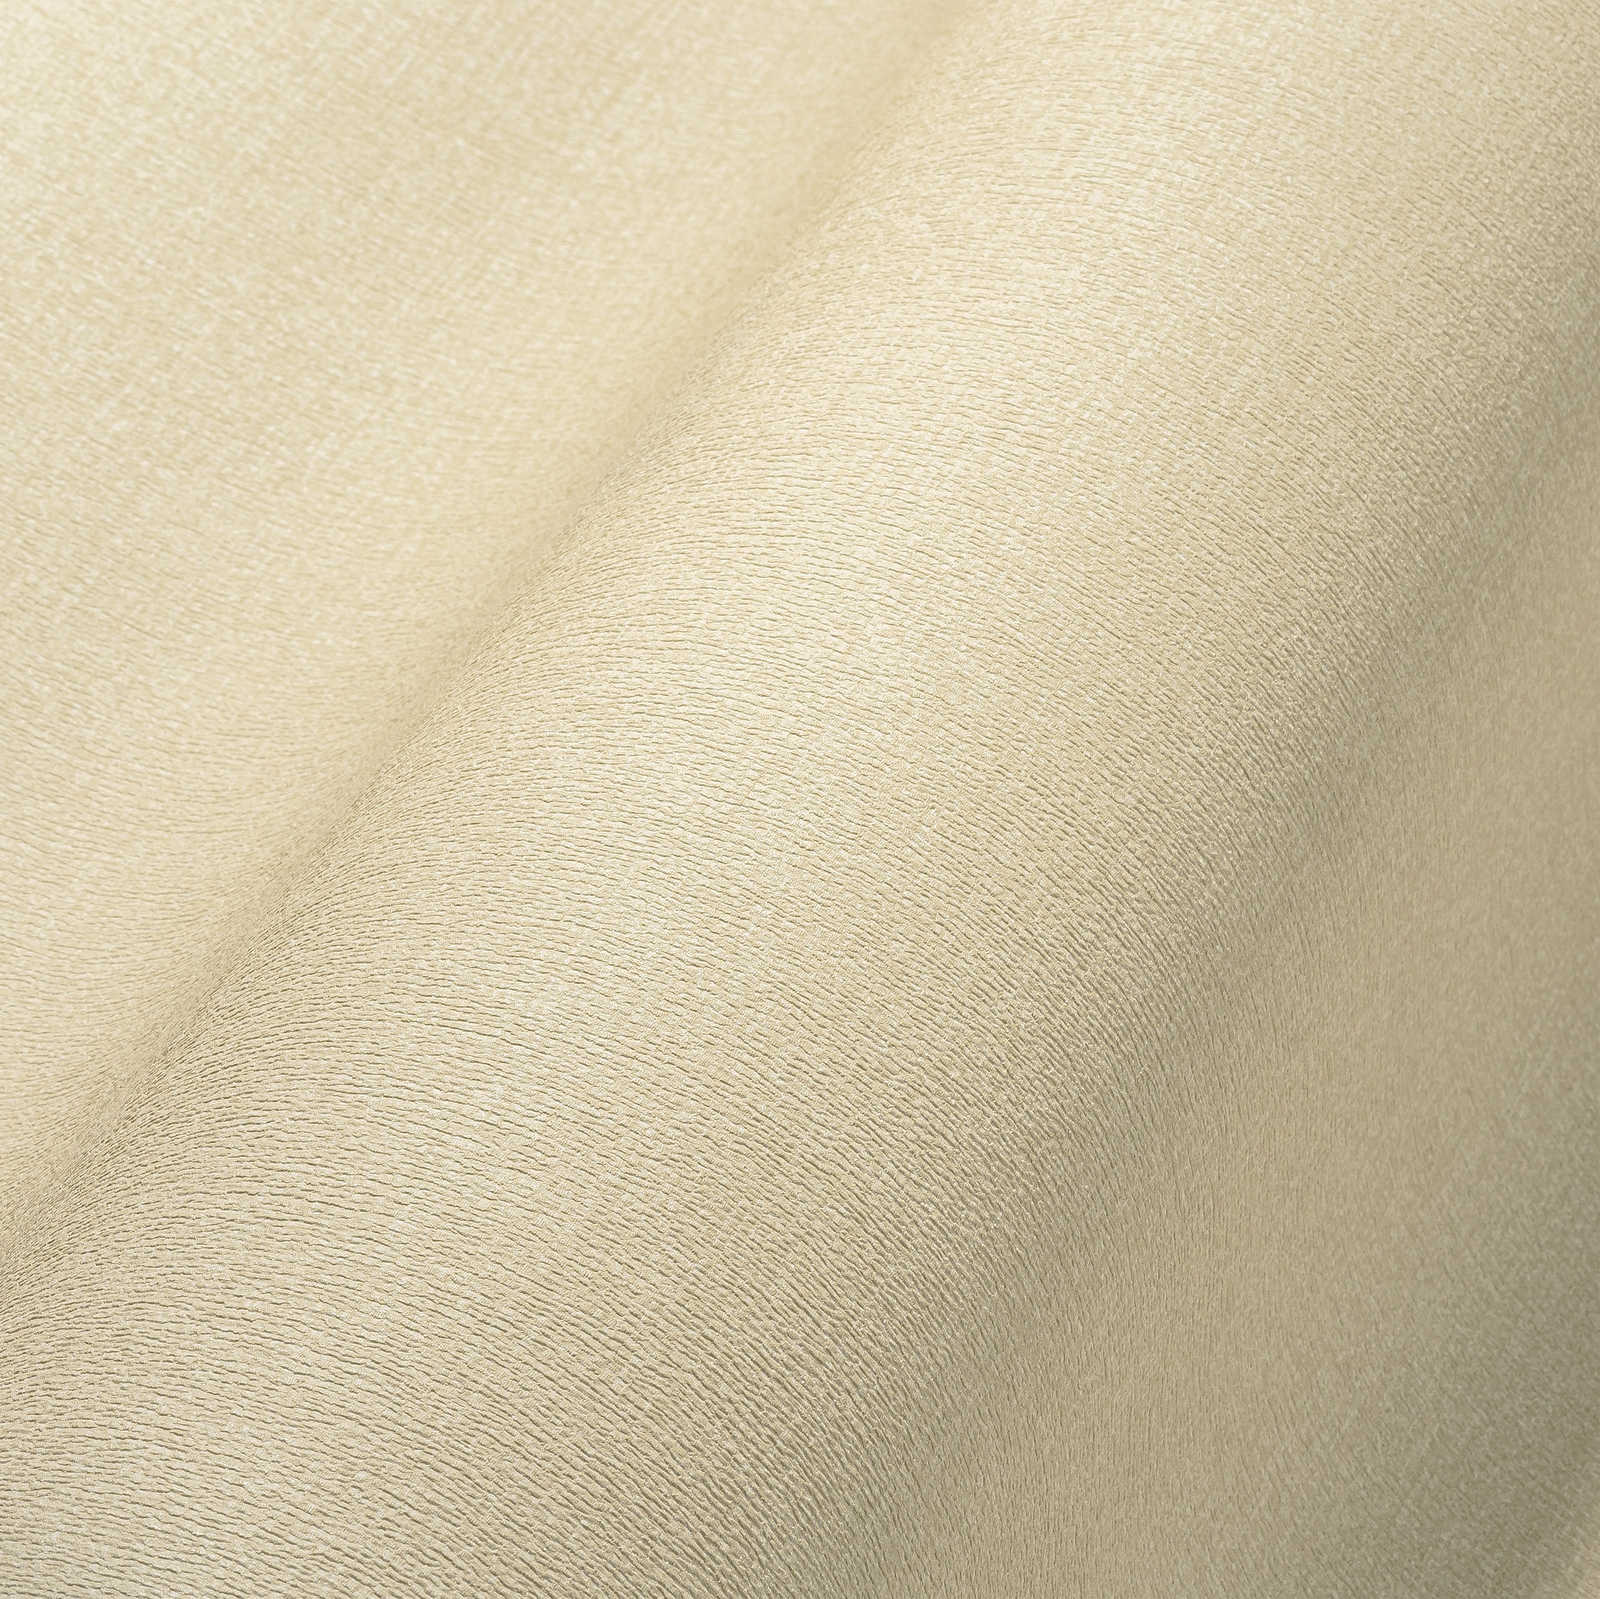             Papel pintado unitario ligeramente texturizado en un tono cálido - beige
        